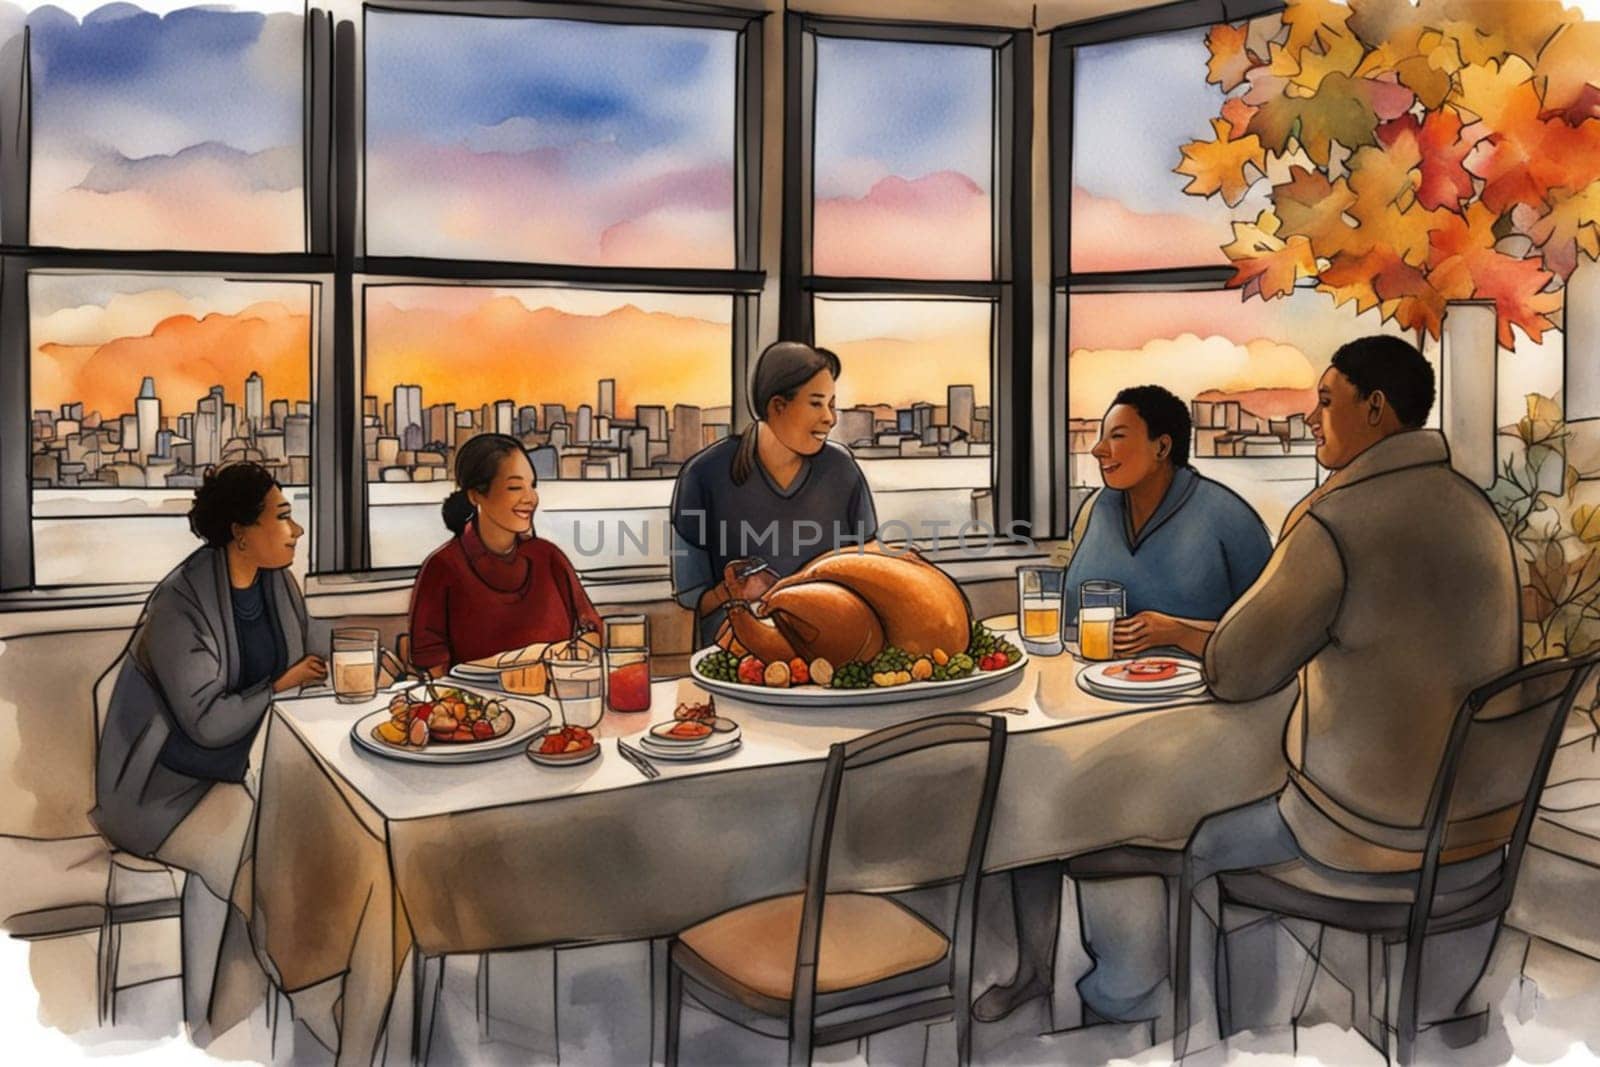 loving family enjoy thanksgiving lunch at the table illustration generative ai art